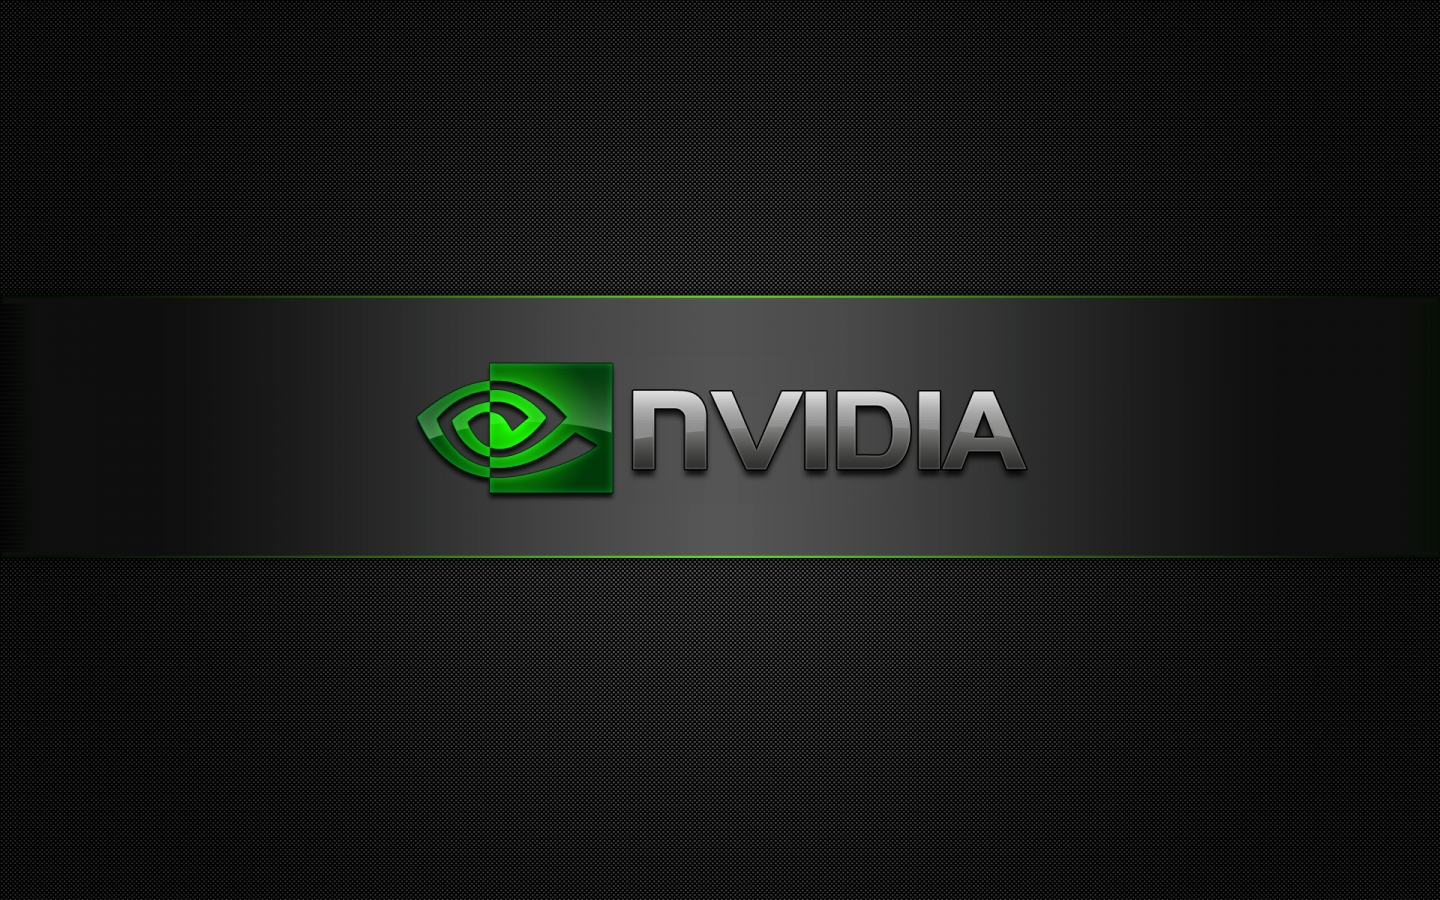 Nvidia Minimalistic for 1440 x 900 widescreen resolution